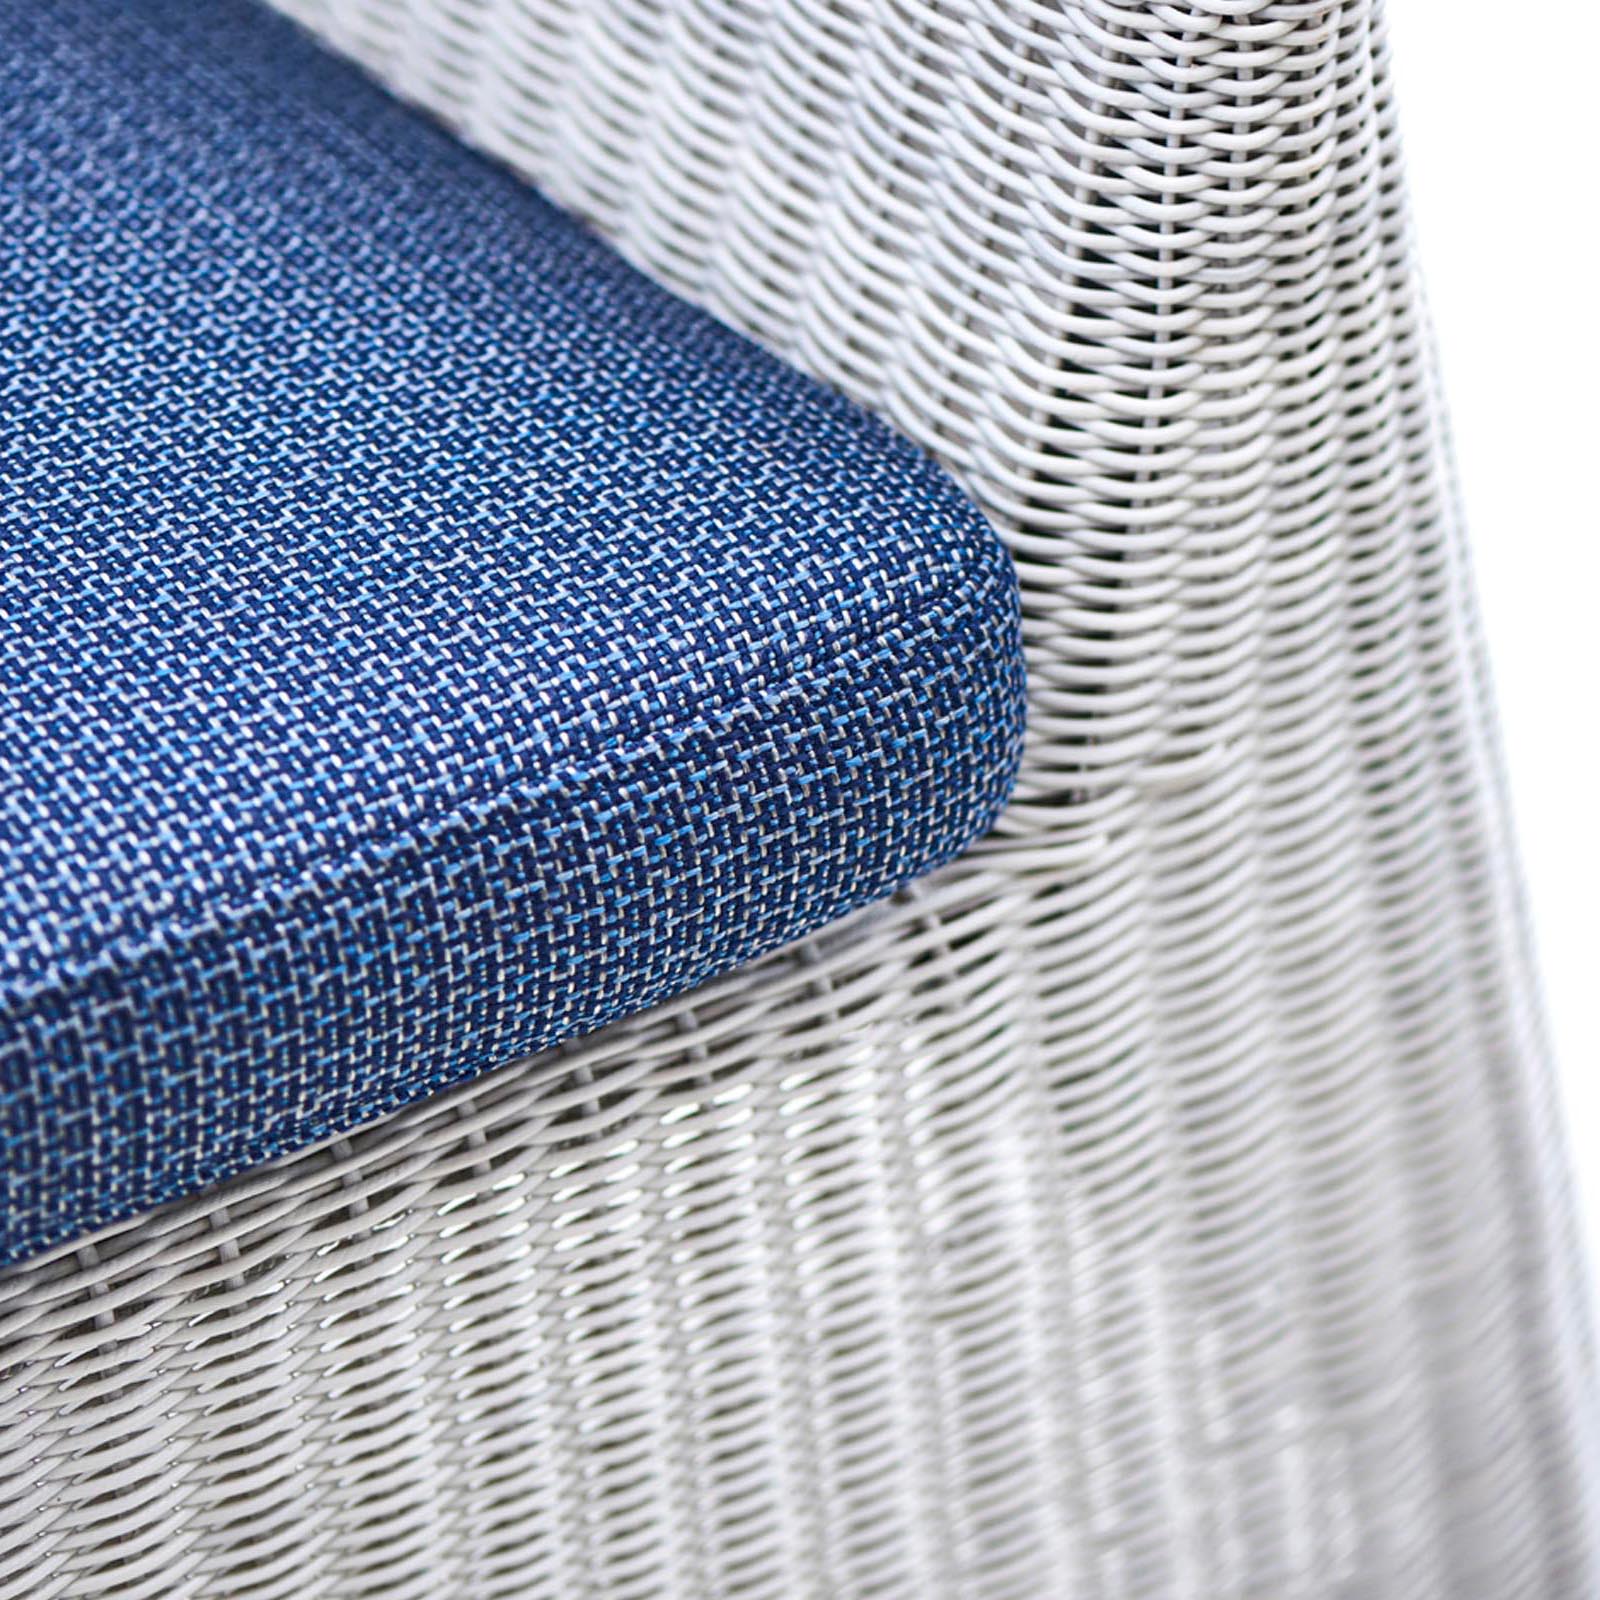 Kingston 2-Sitzer Sofa aus Cane-line Weave in Mocca mit Kissen aus Cane-line Link in Blue